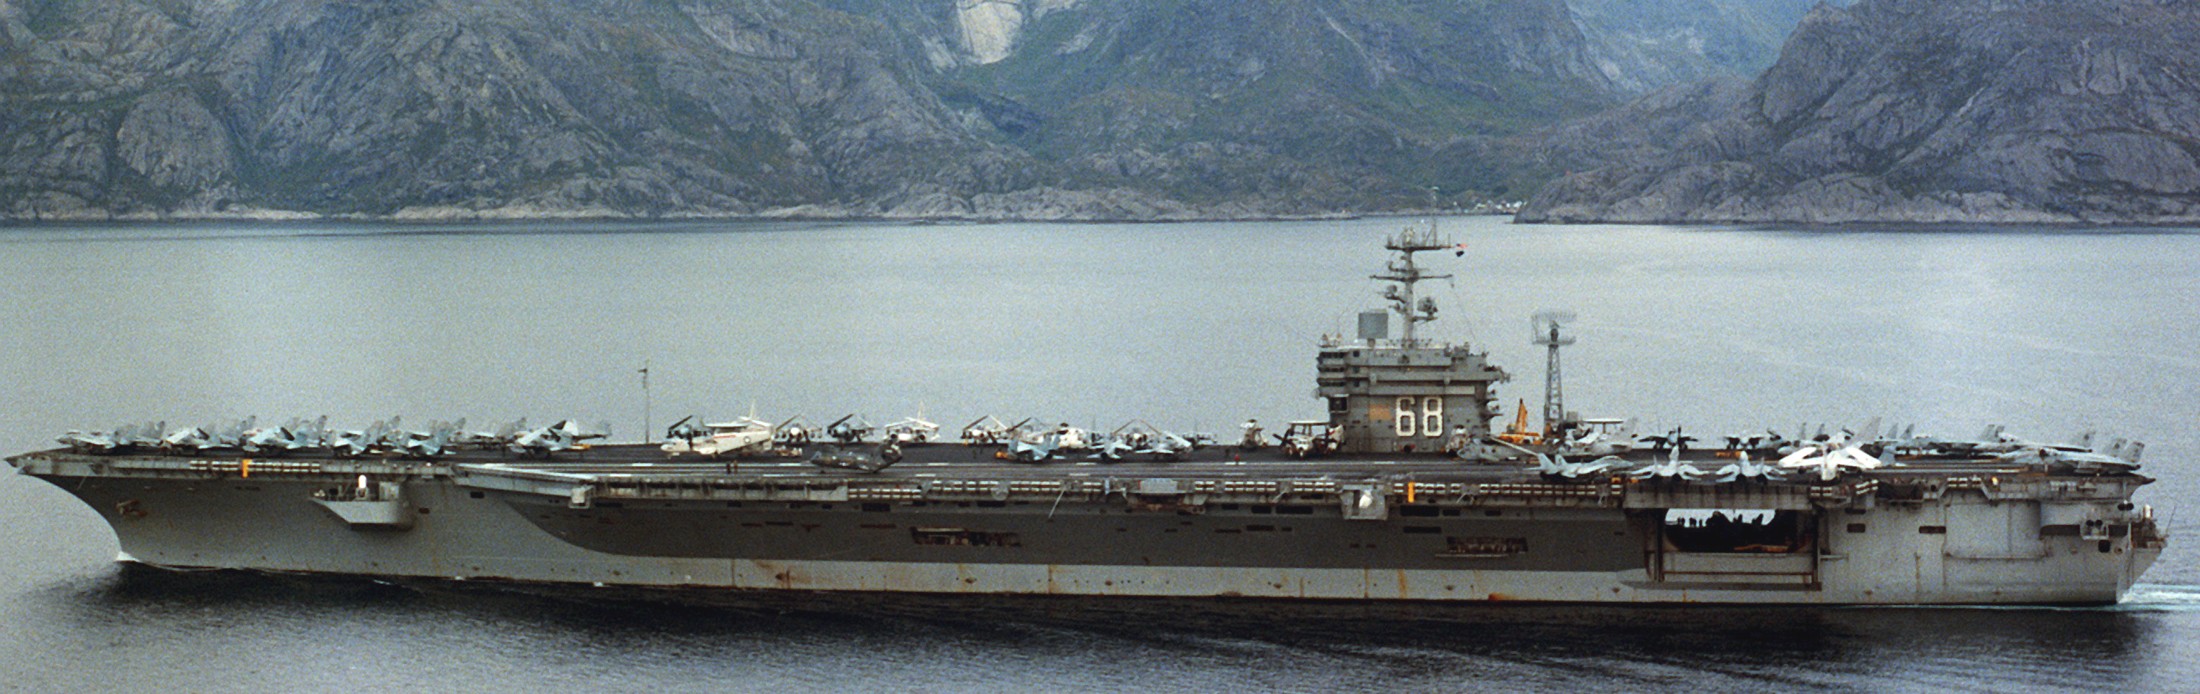 cvn-68 uss nimitz aircraft carrier air wing cvw-8 us navy northern wedding nato 1986 46